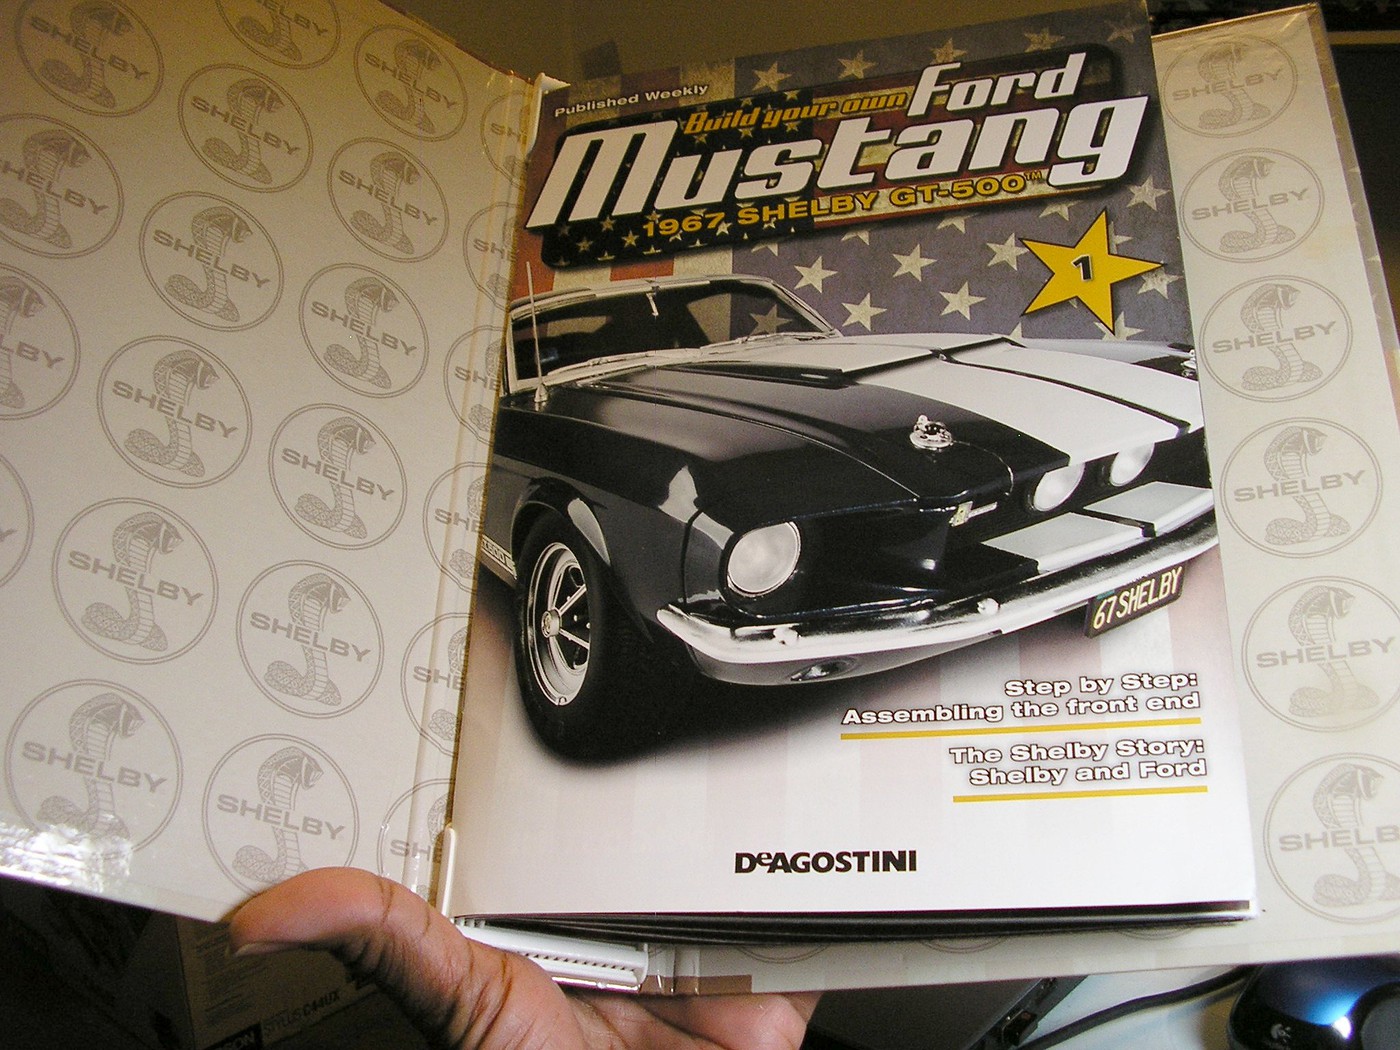 Bauteile Nr 1-100 ✯ Deagostini ✯ Ford Mustang Shelby GT-500 von 1967 ✯ Hefte